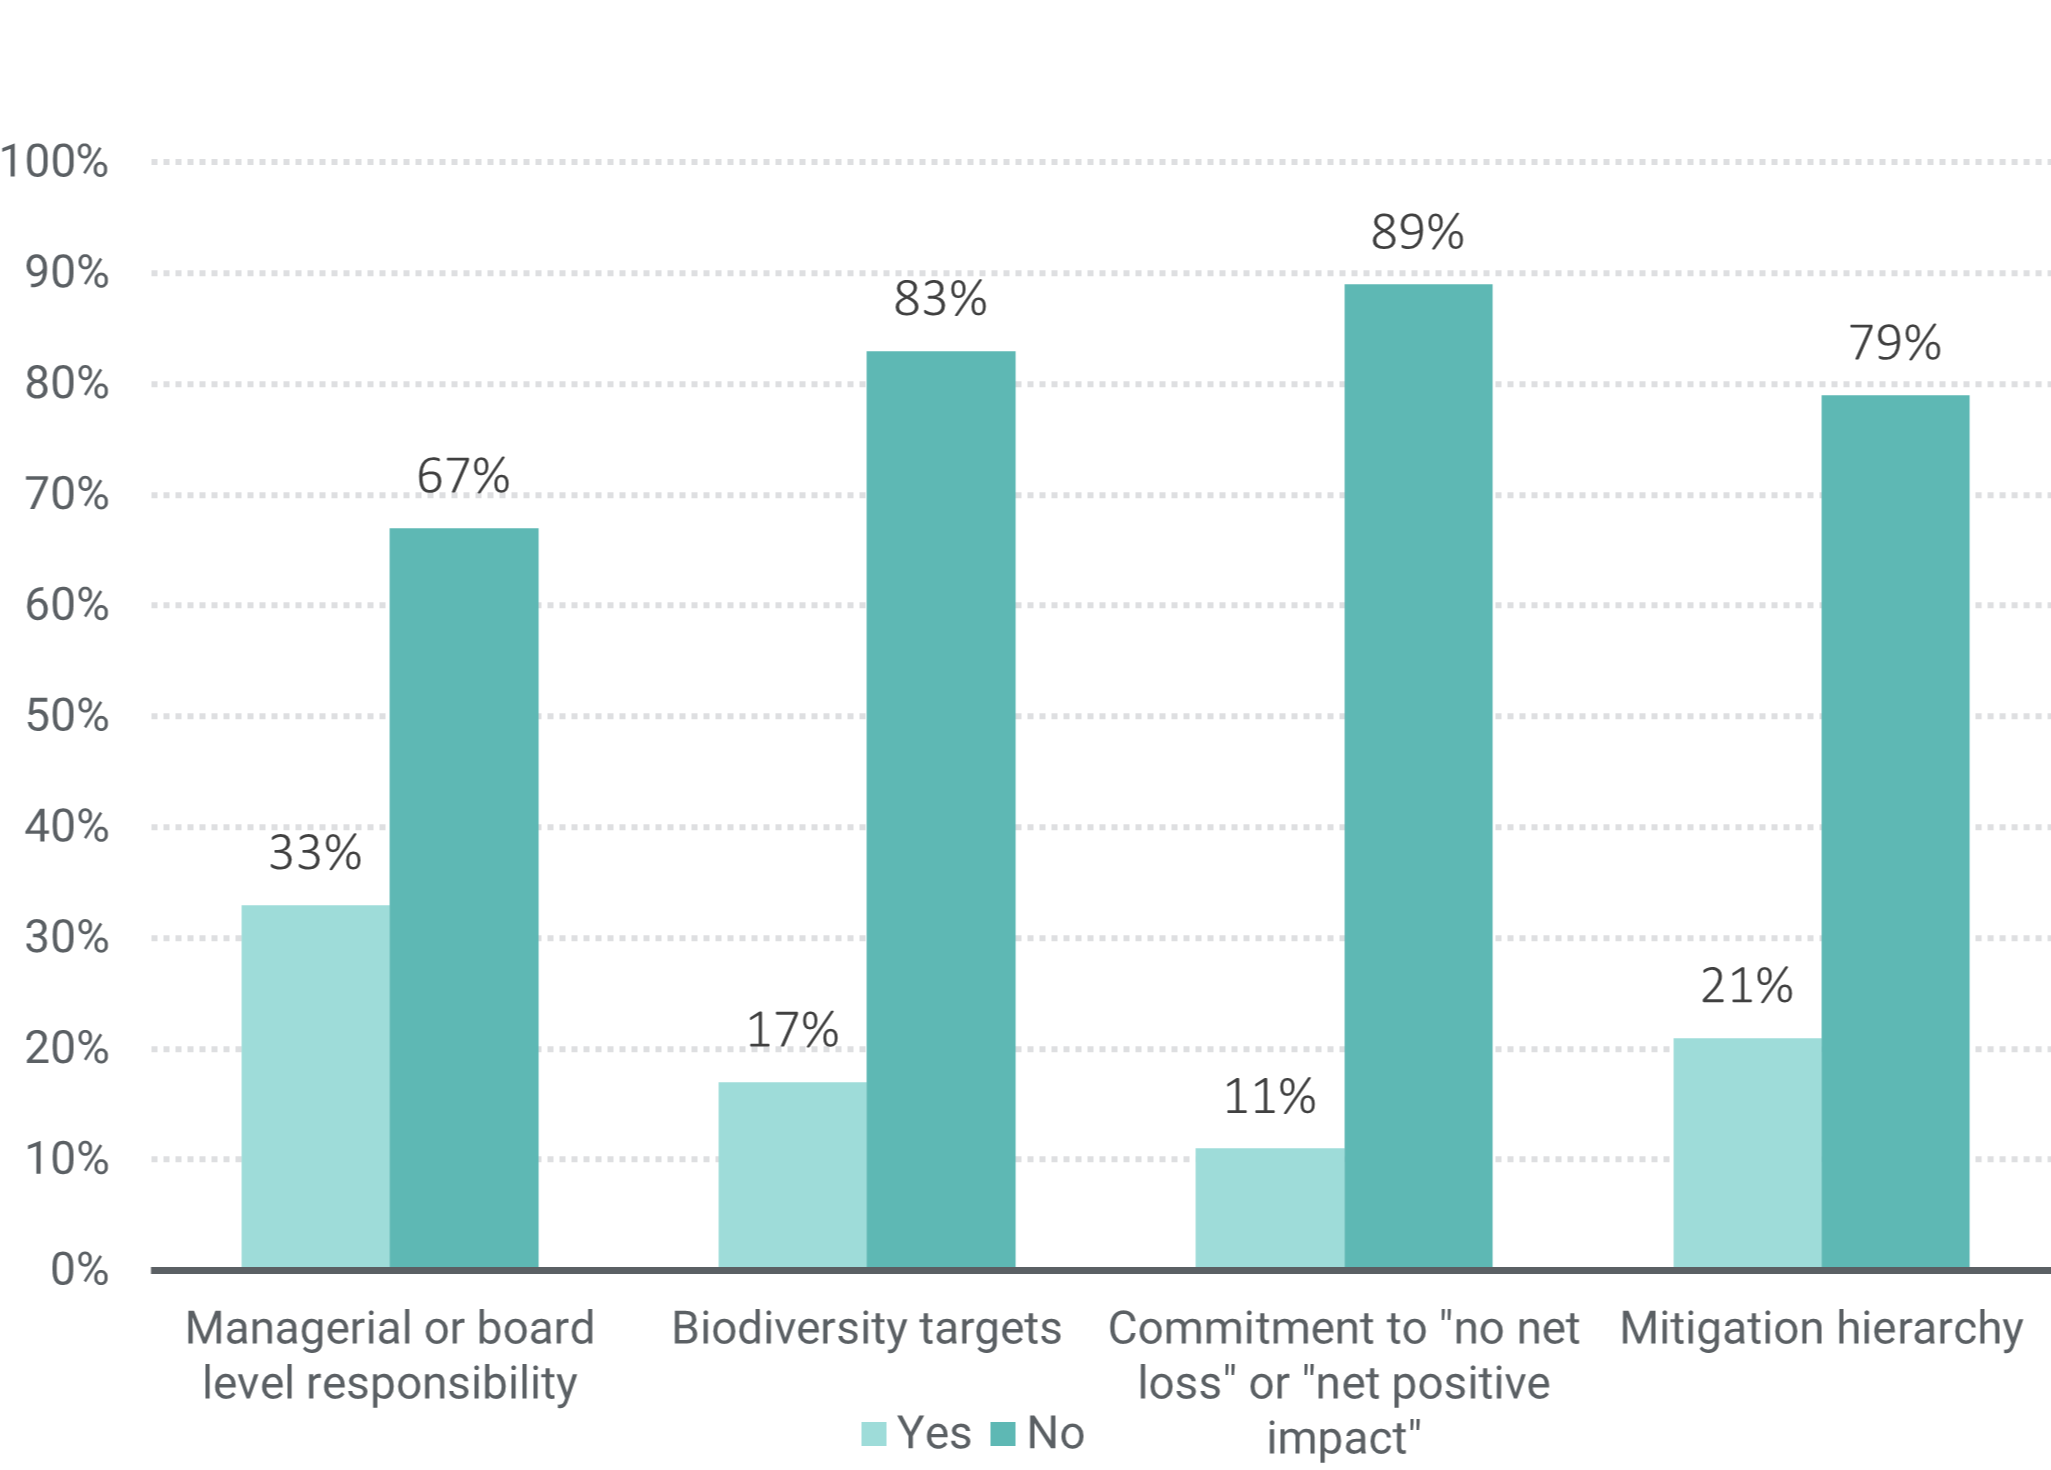 Figure 1. Percentage of Companies Meeting Specific Criteria Within Their Biodiversity Program